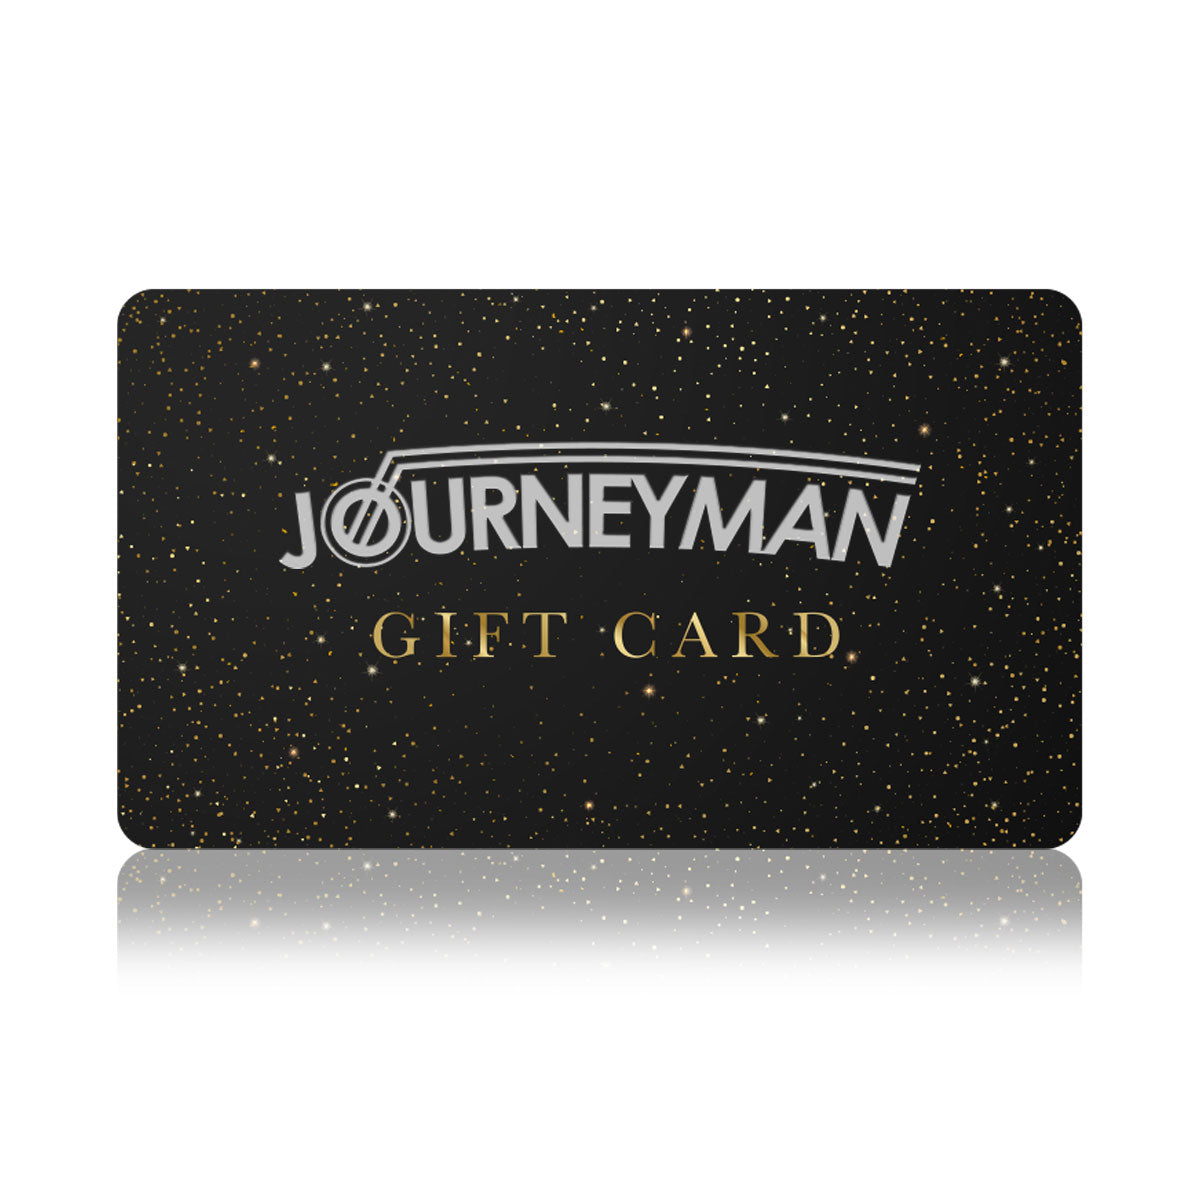 Journeyman Gift Card